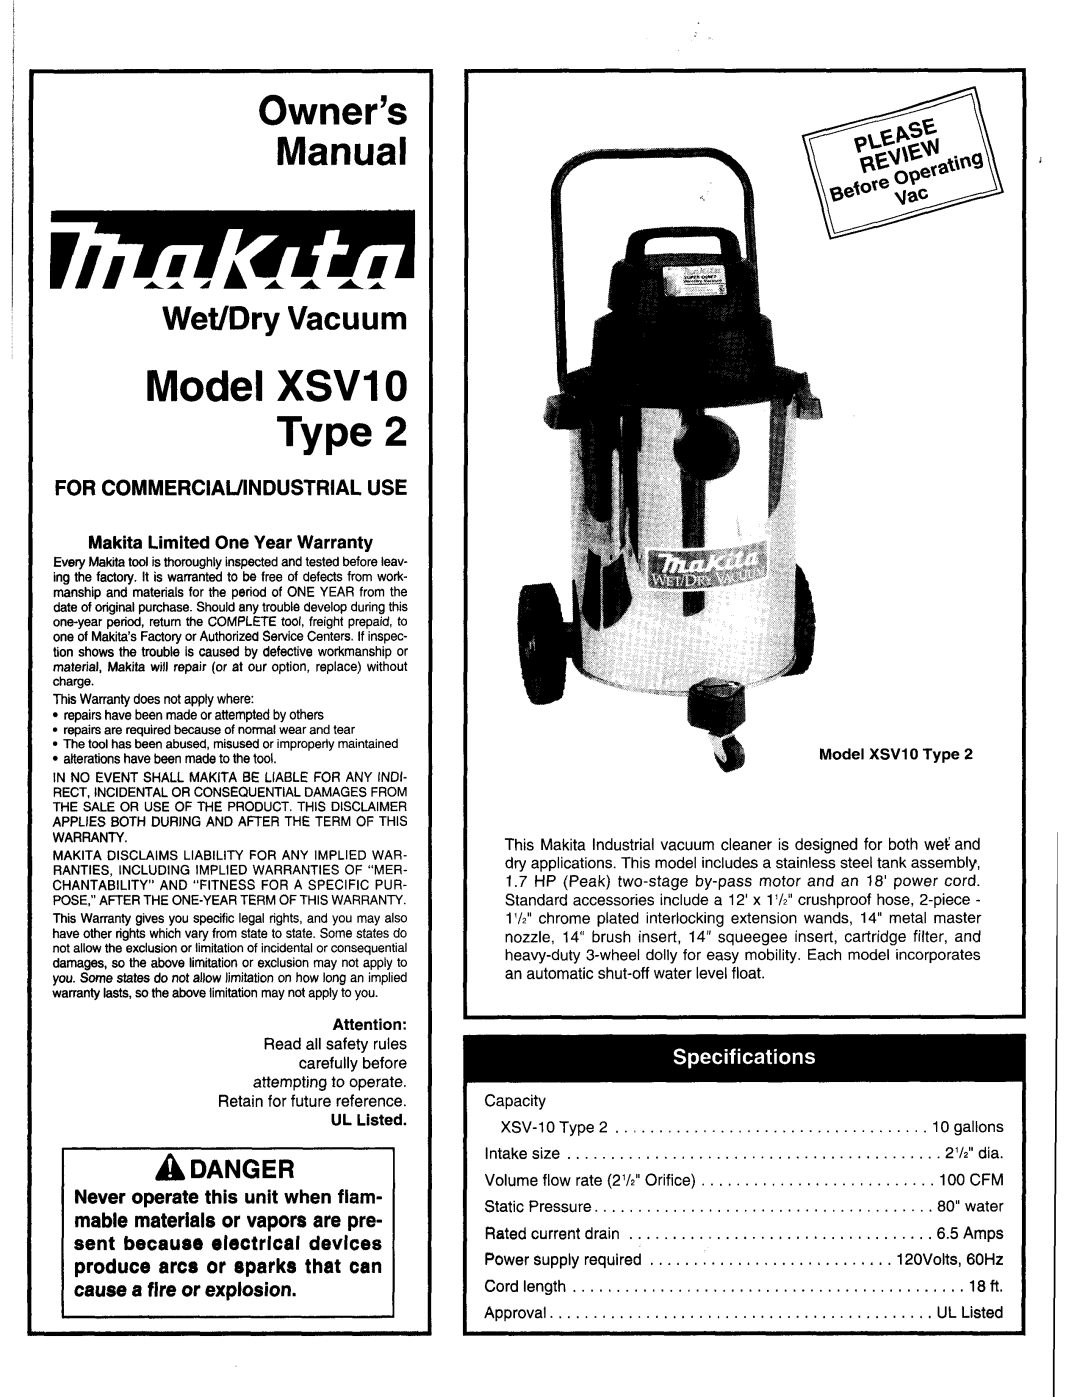 Makita warranty UL Listed, Model XSVlO Type, Model XSV10, Wet/Dry Vacuum, A Danger, For Commerciaundustrialuse 